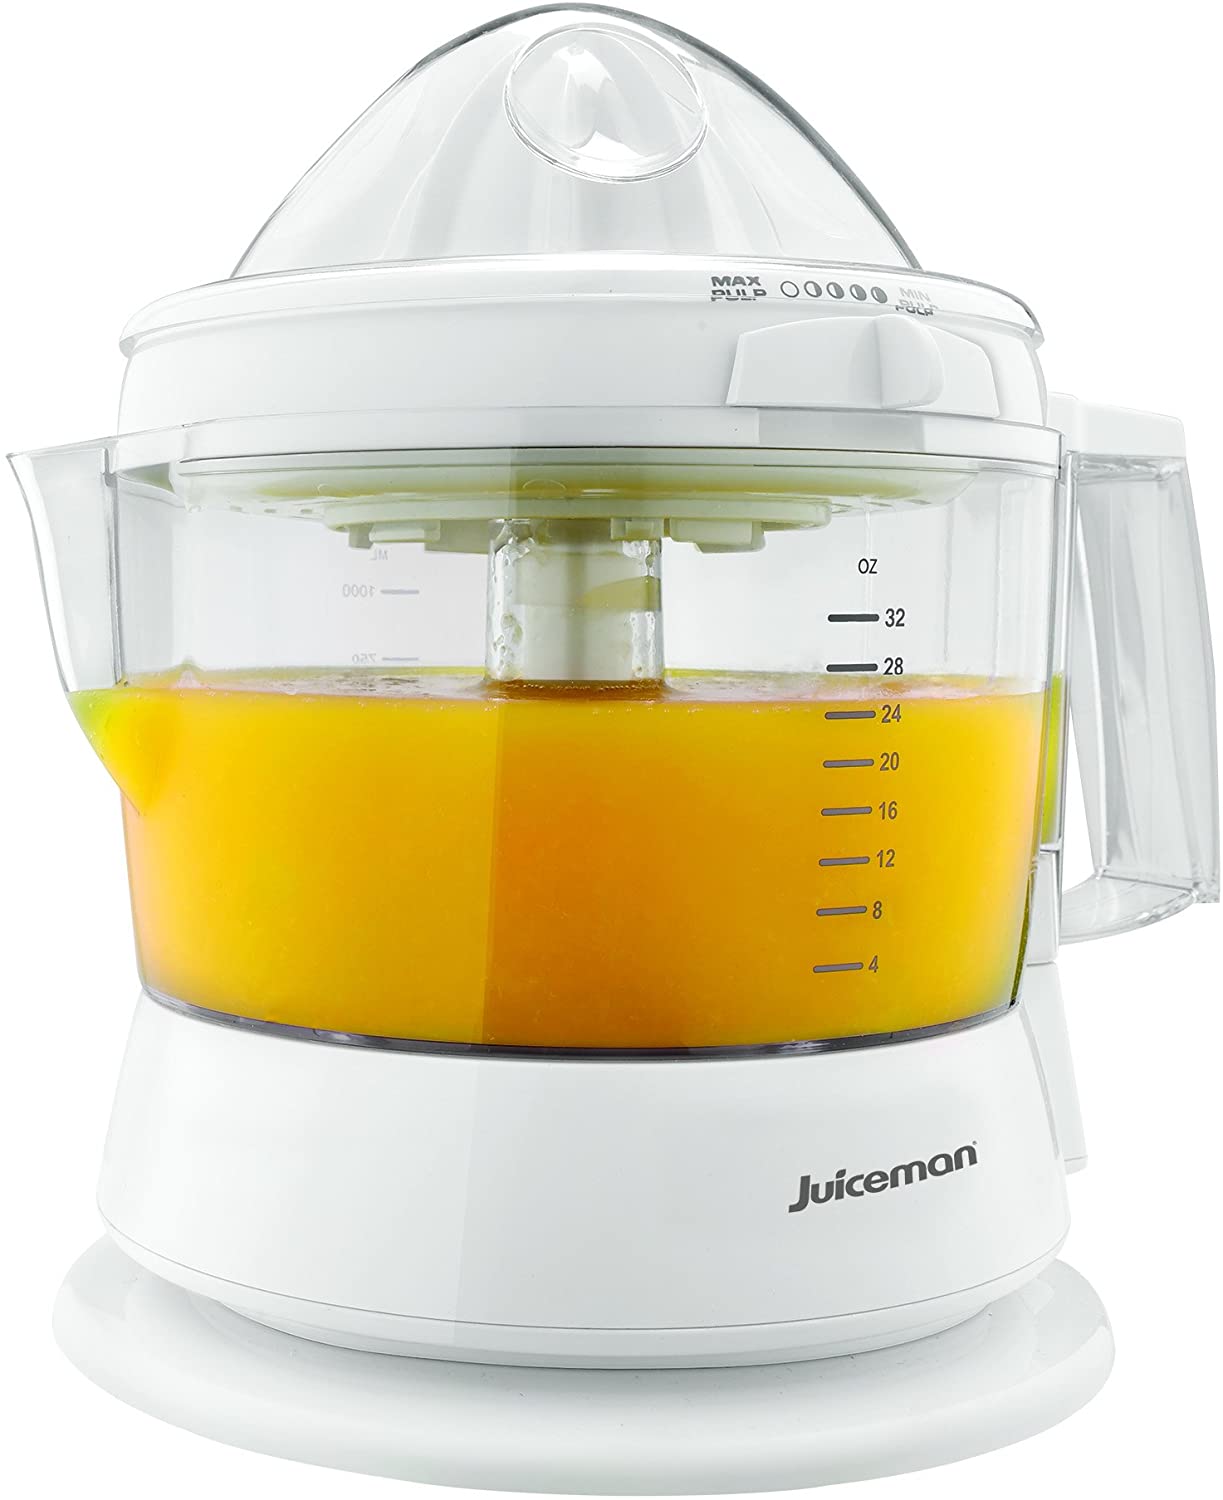 Juiceman Electric Citrus Juicer CJ630